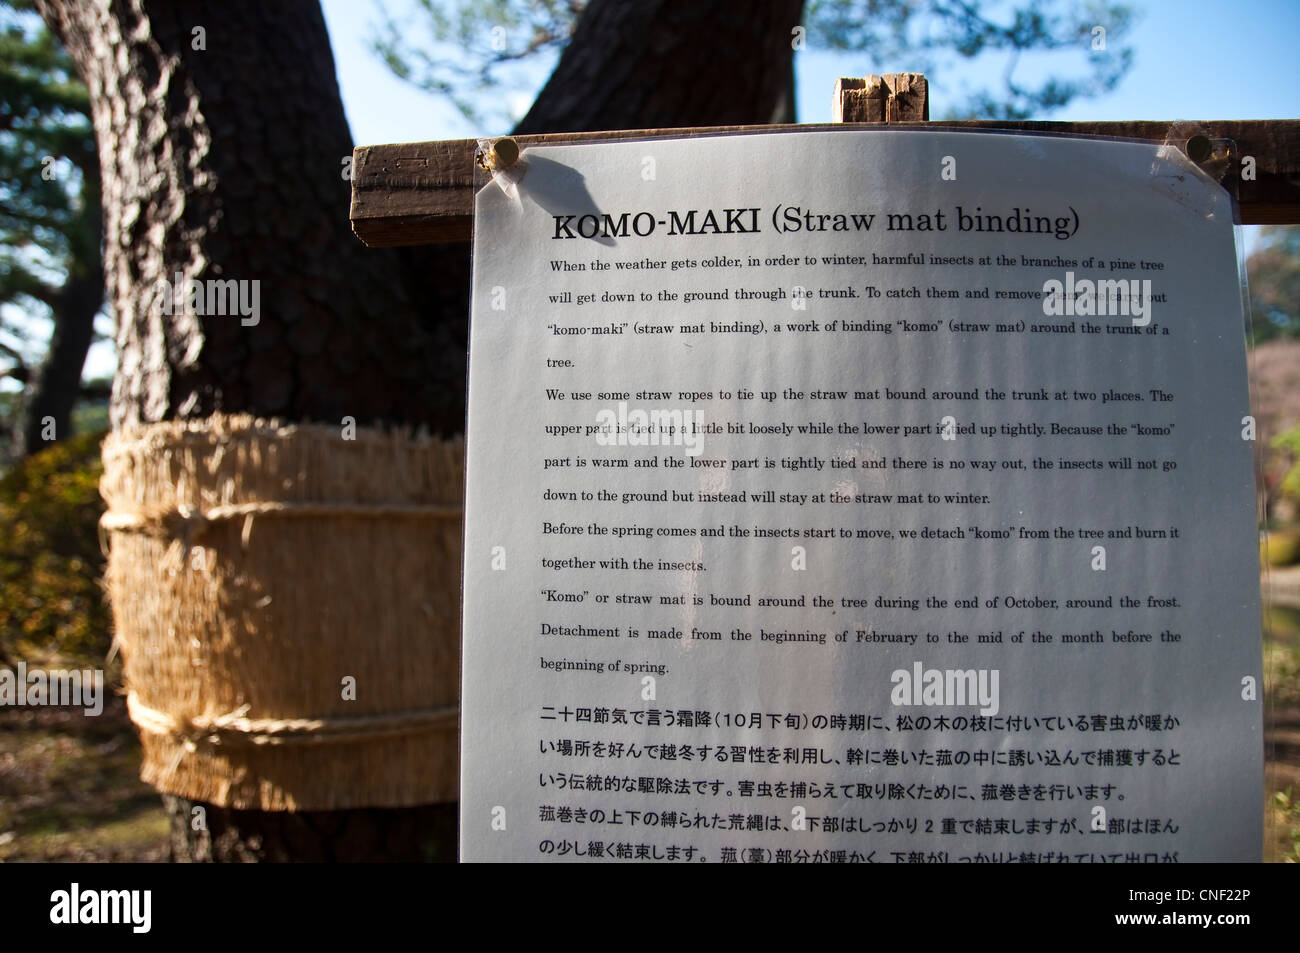 Komo maki - Straw mat binding on a pine tree trunk in Rikugien garden in Tokyo - Japan Stock Photo